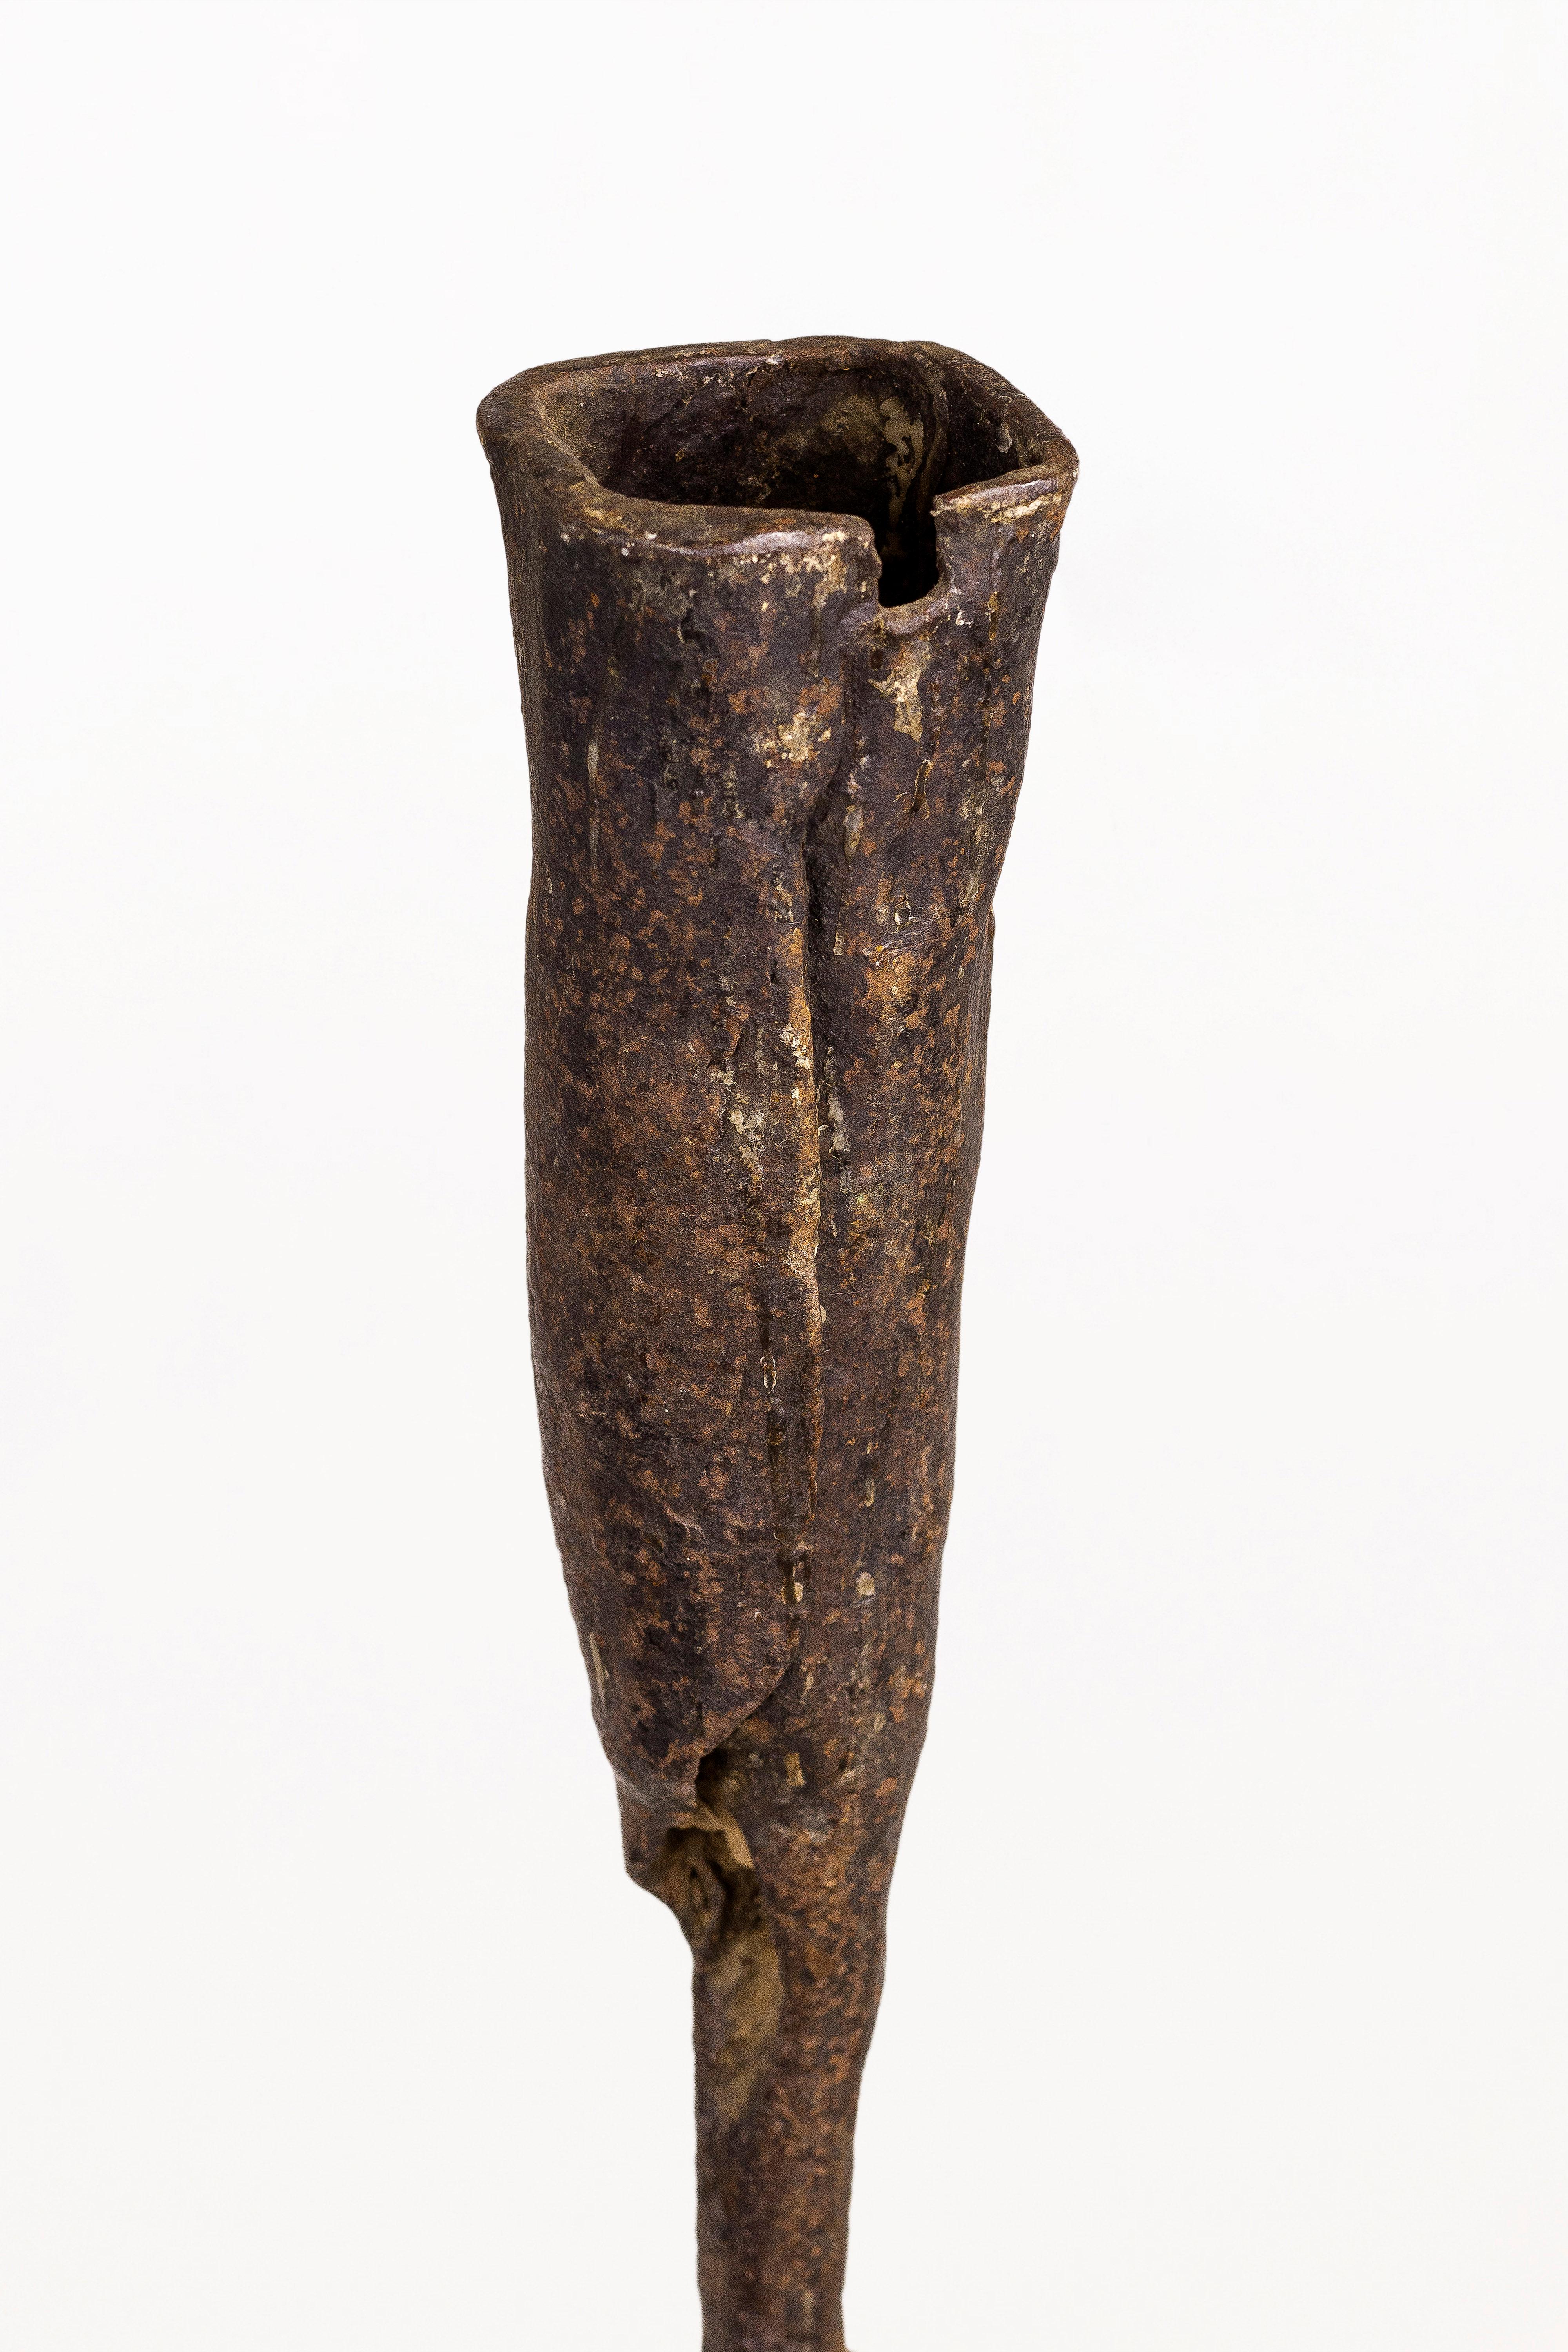 Spanish Iron Candleholder, 15th Century, Spain